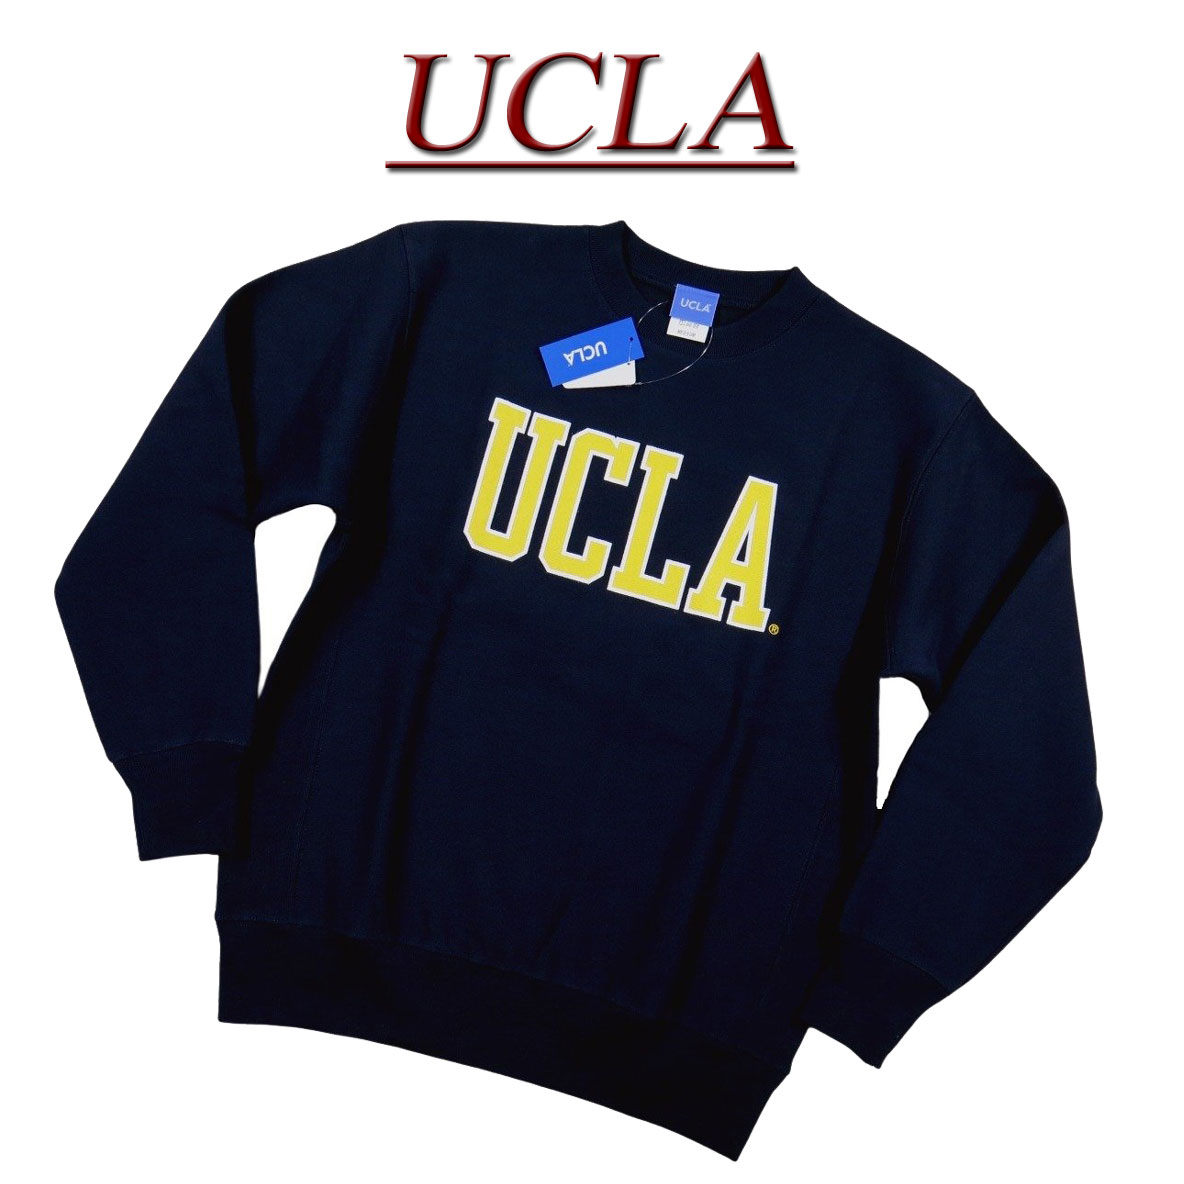  jf771 新品 UCLA カレッジプリント ヘビーウェイト スウェットシャツ UCLA-0517 メンズ カリフォルニア大学 ロサンゼルス校 L/S COLLEGE SWEATSHIRT ユーシーエルエー 裏起毛 スエット トレーナー 